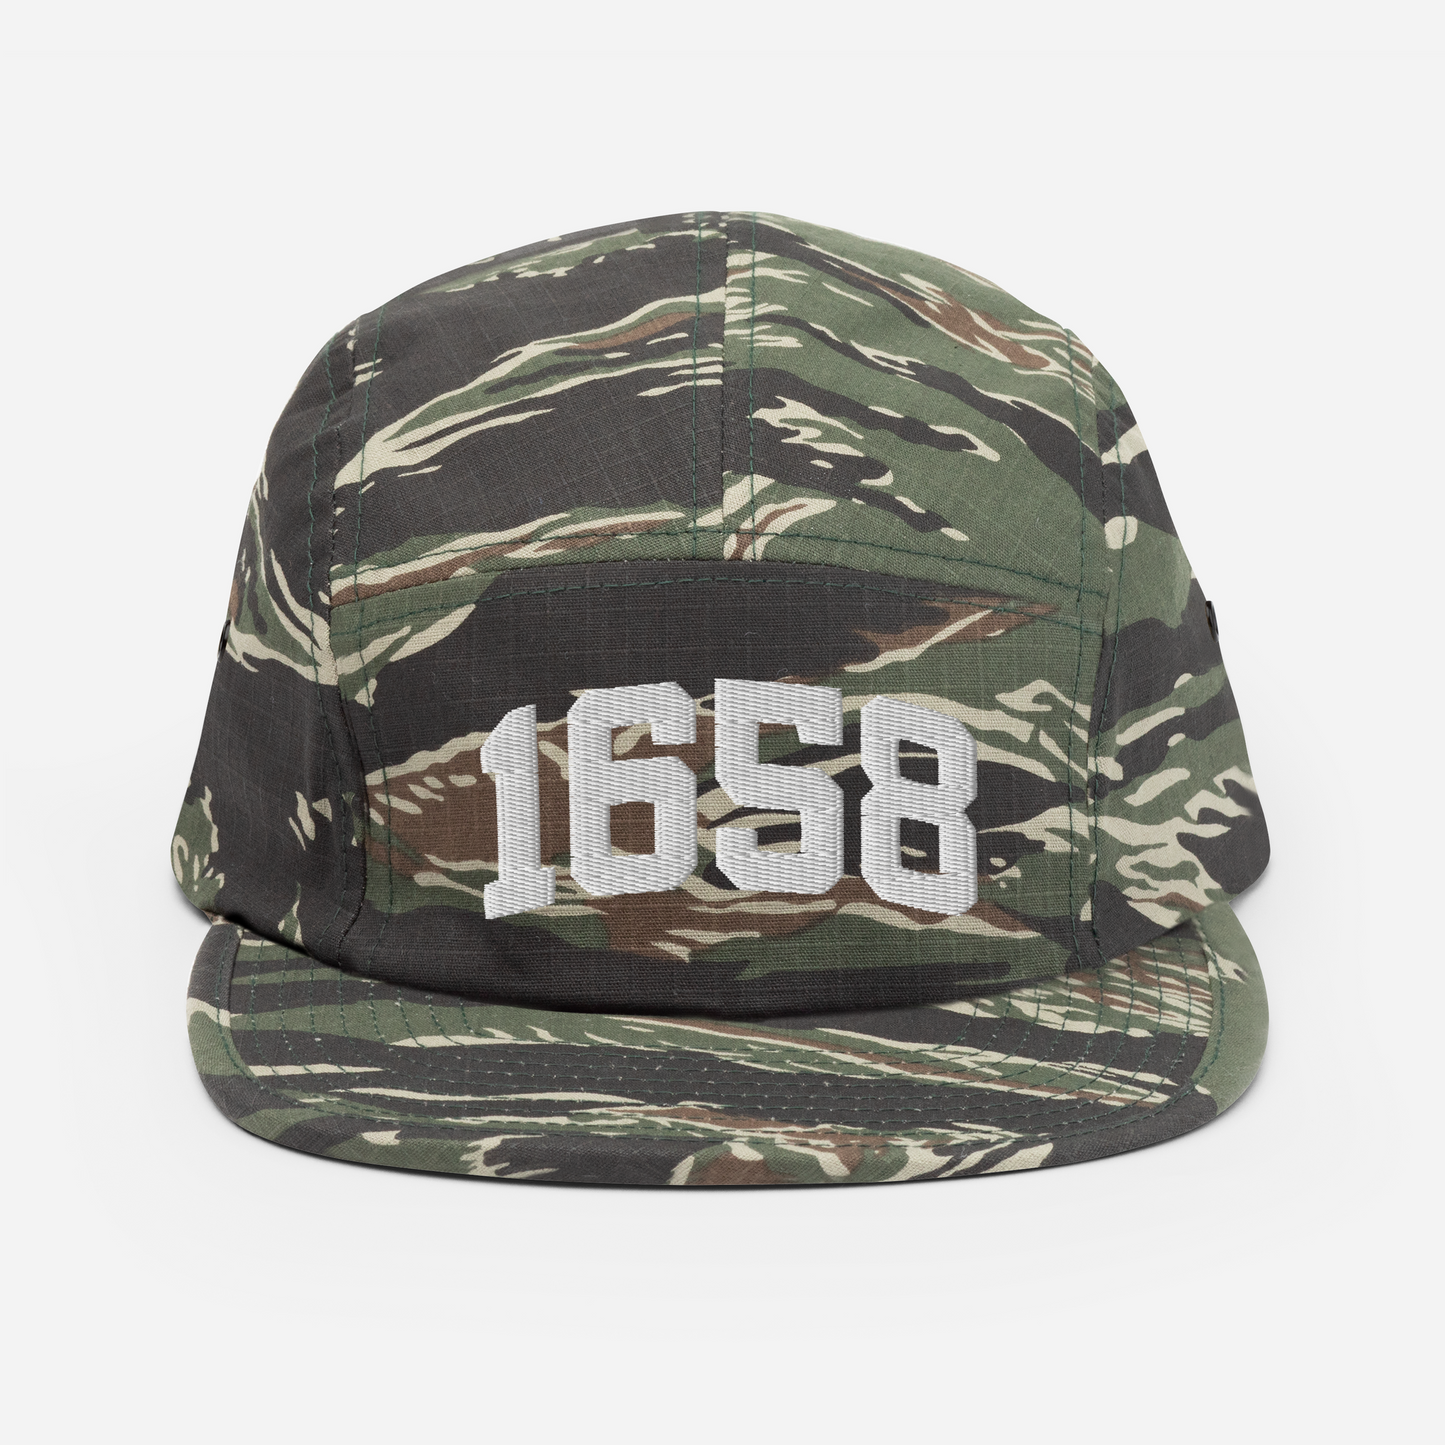 1658 Camper Hat